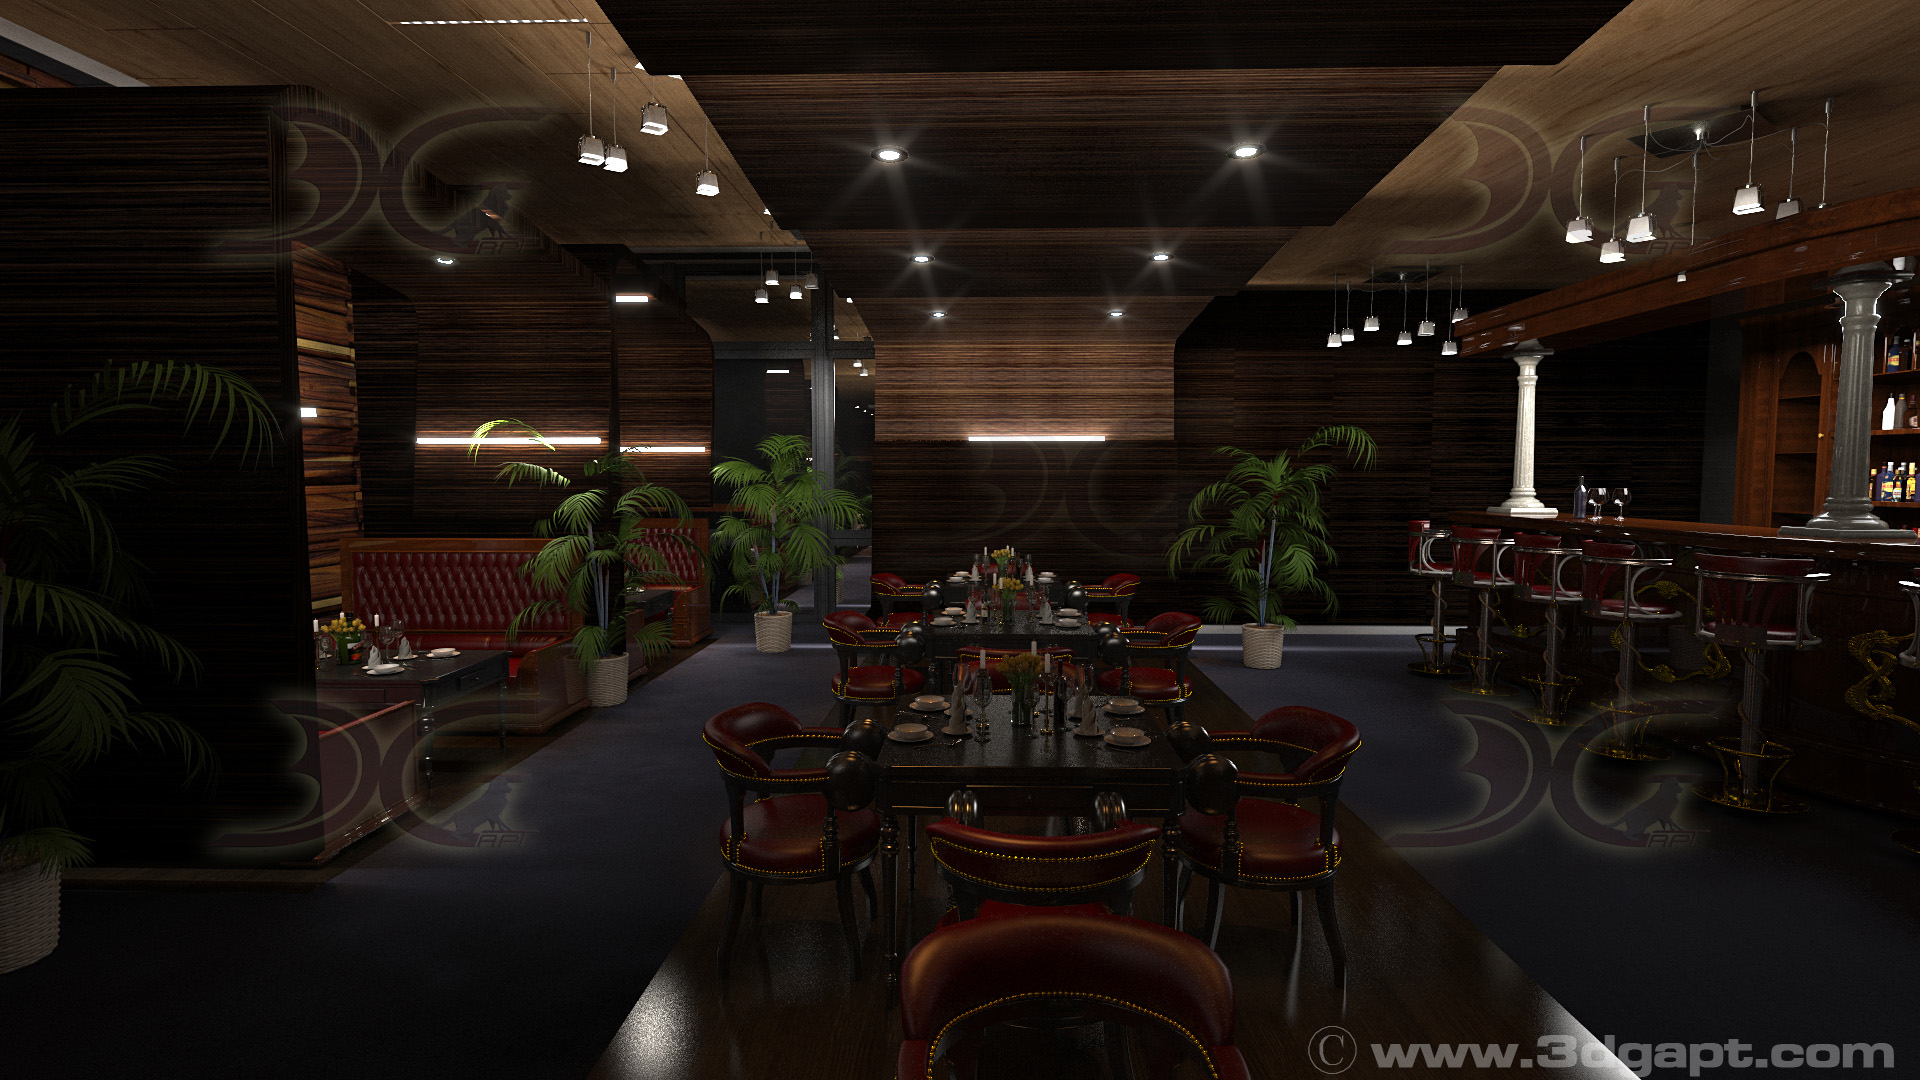 architecture interior bar restaurant 003